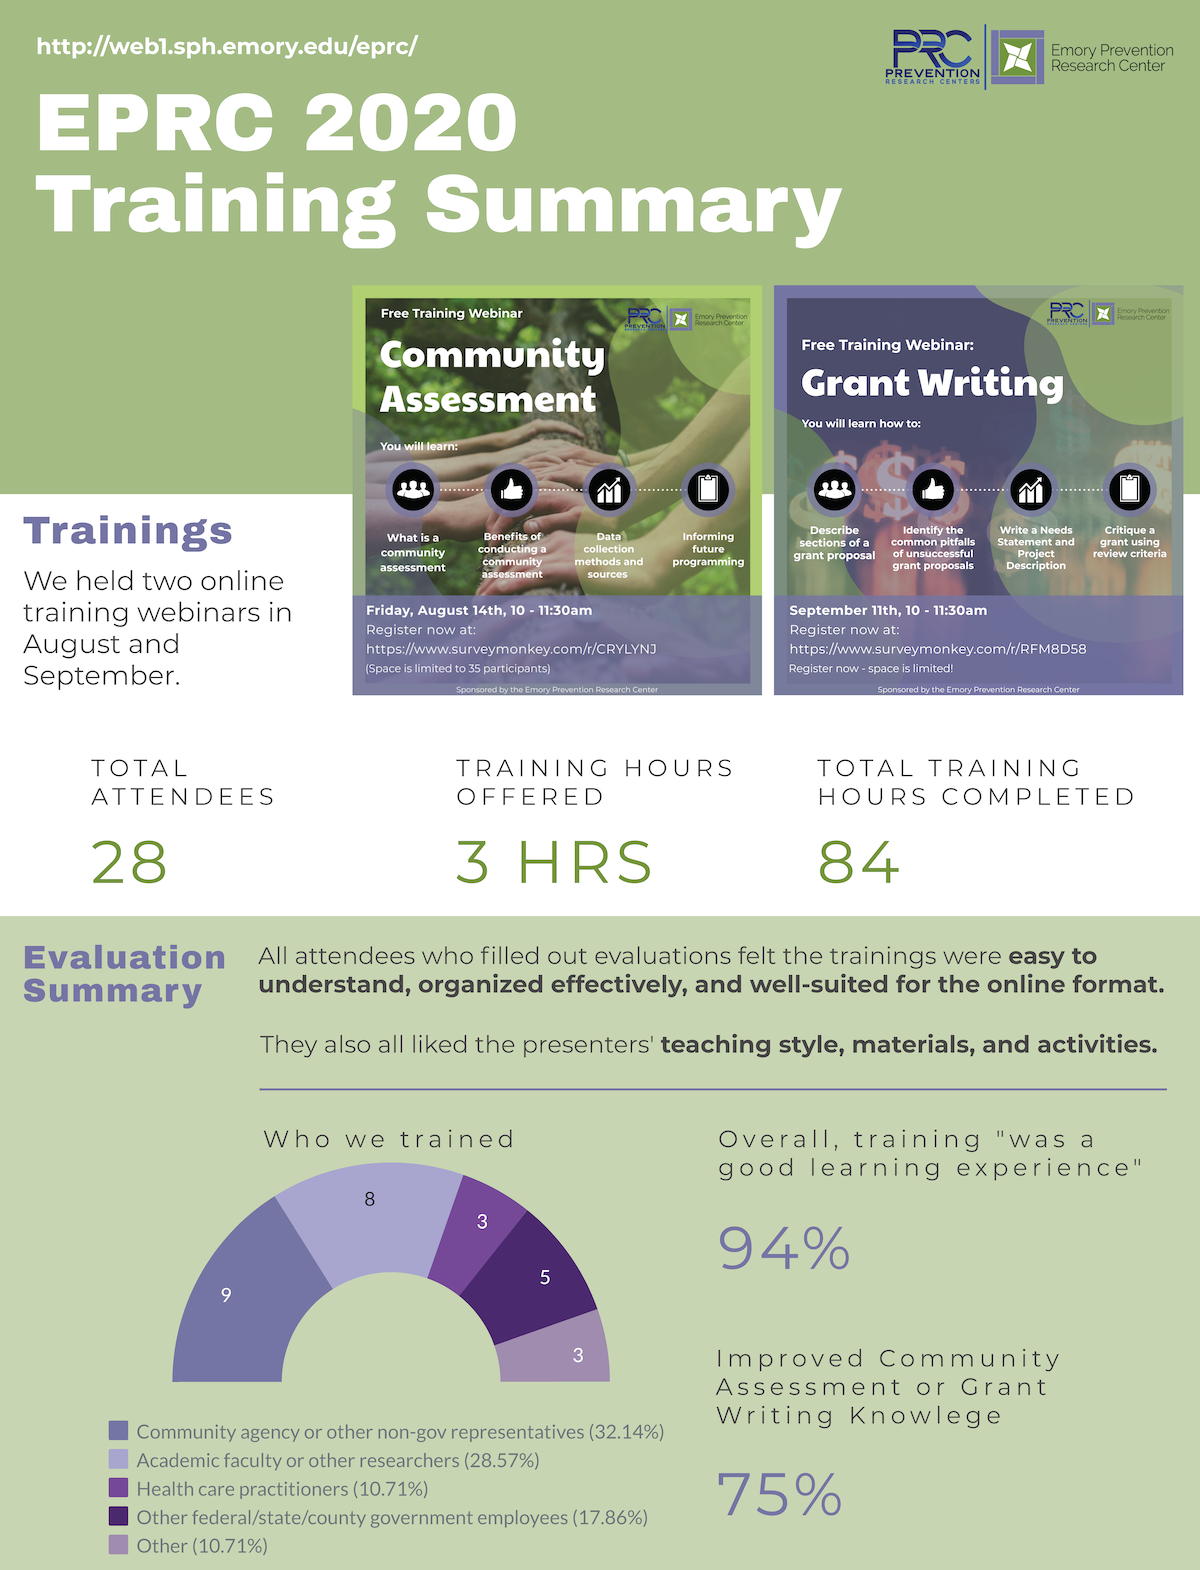 Training Summary Evaluation